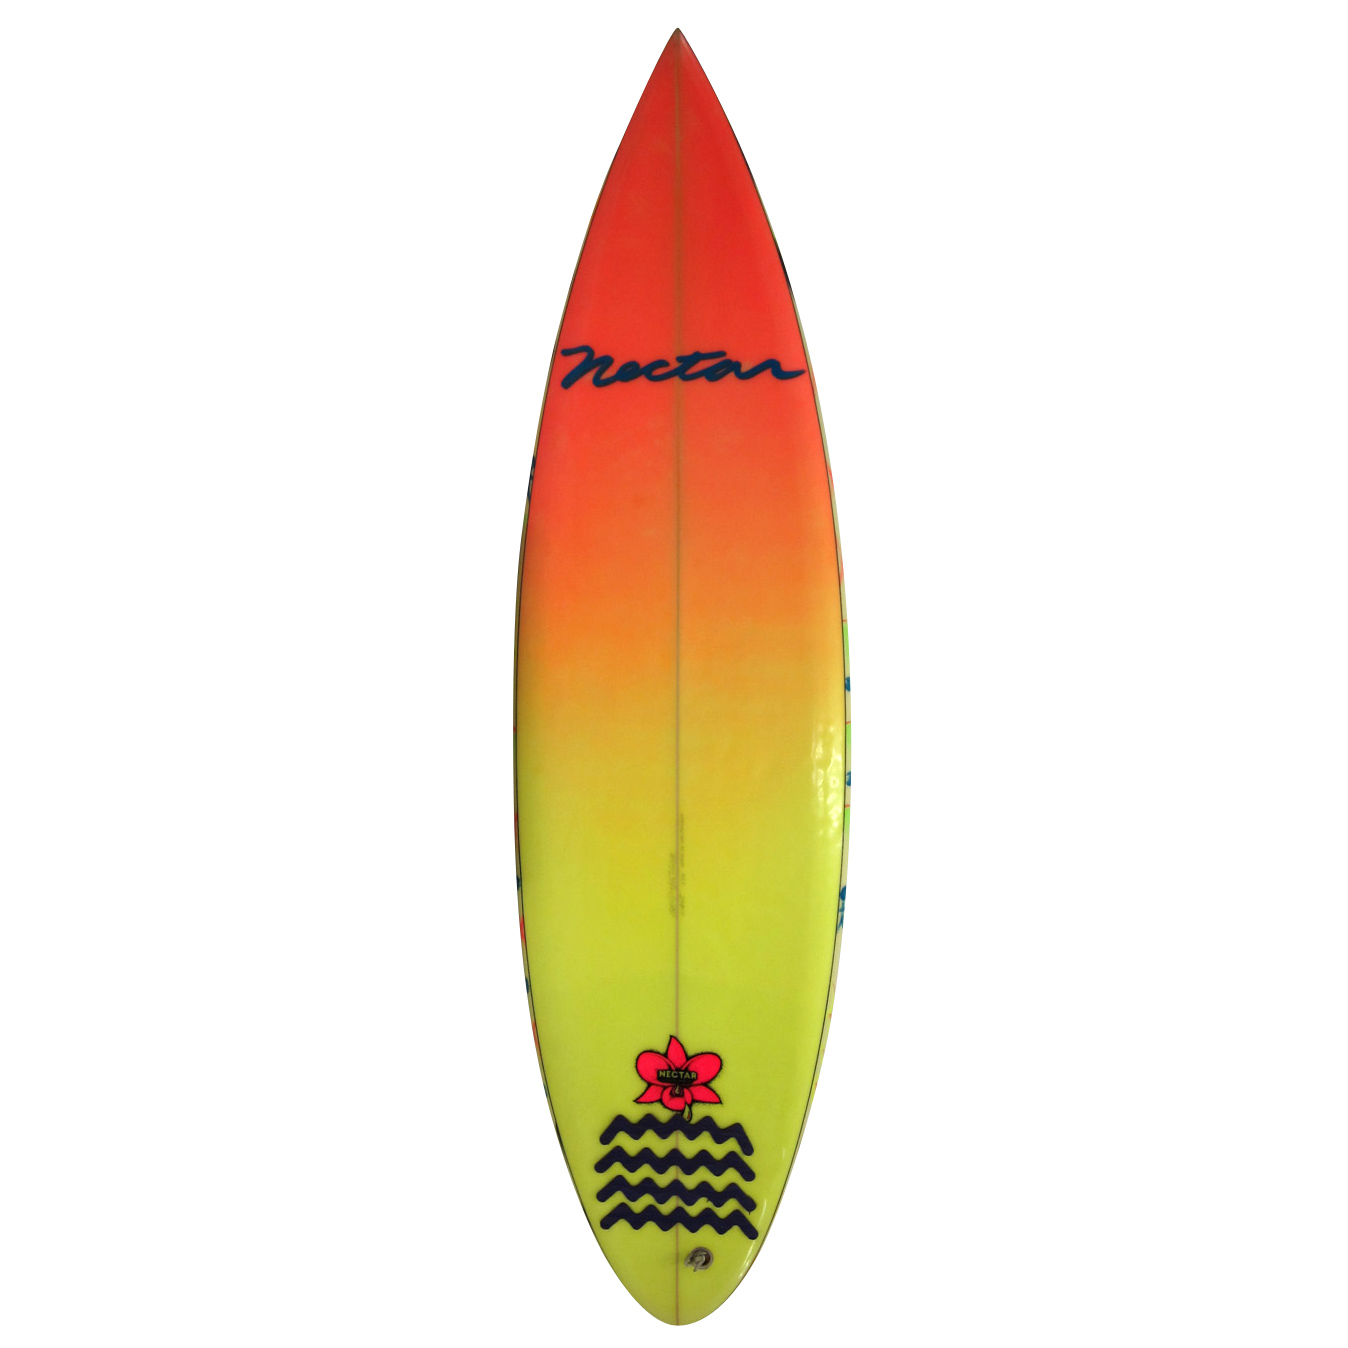  / Nectar Surfboards / 5`10 Thruster Vintage Shape By Gary MacNabb 